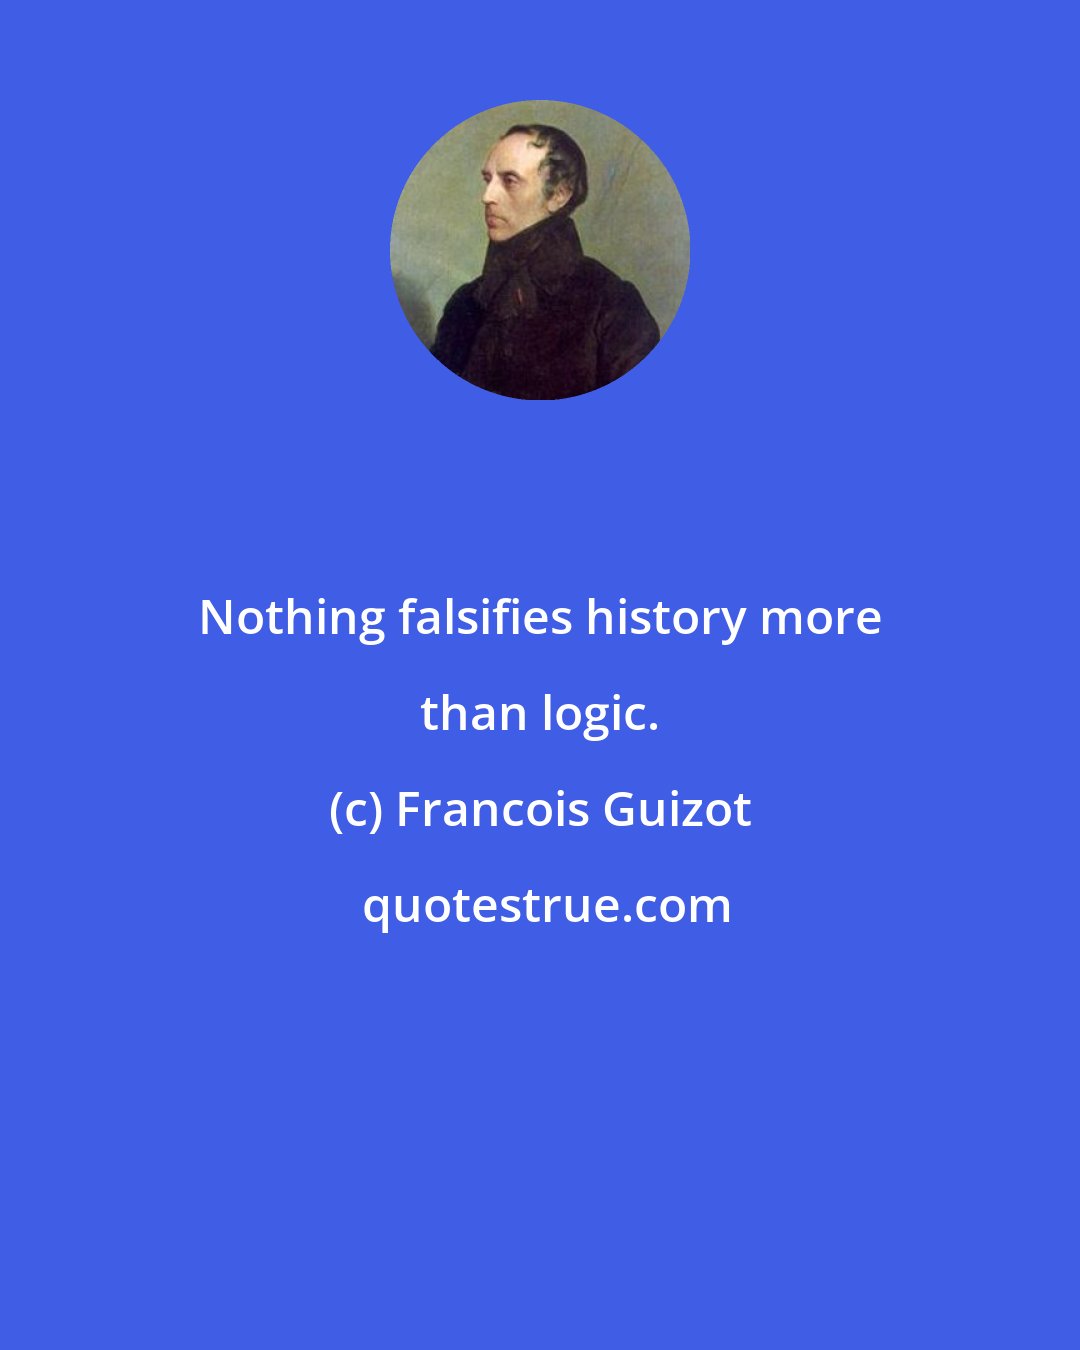 Francois Guizot: Nothing falsifies history more than logic.